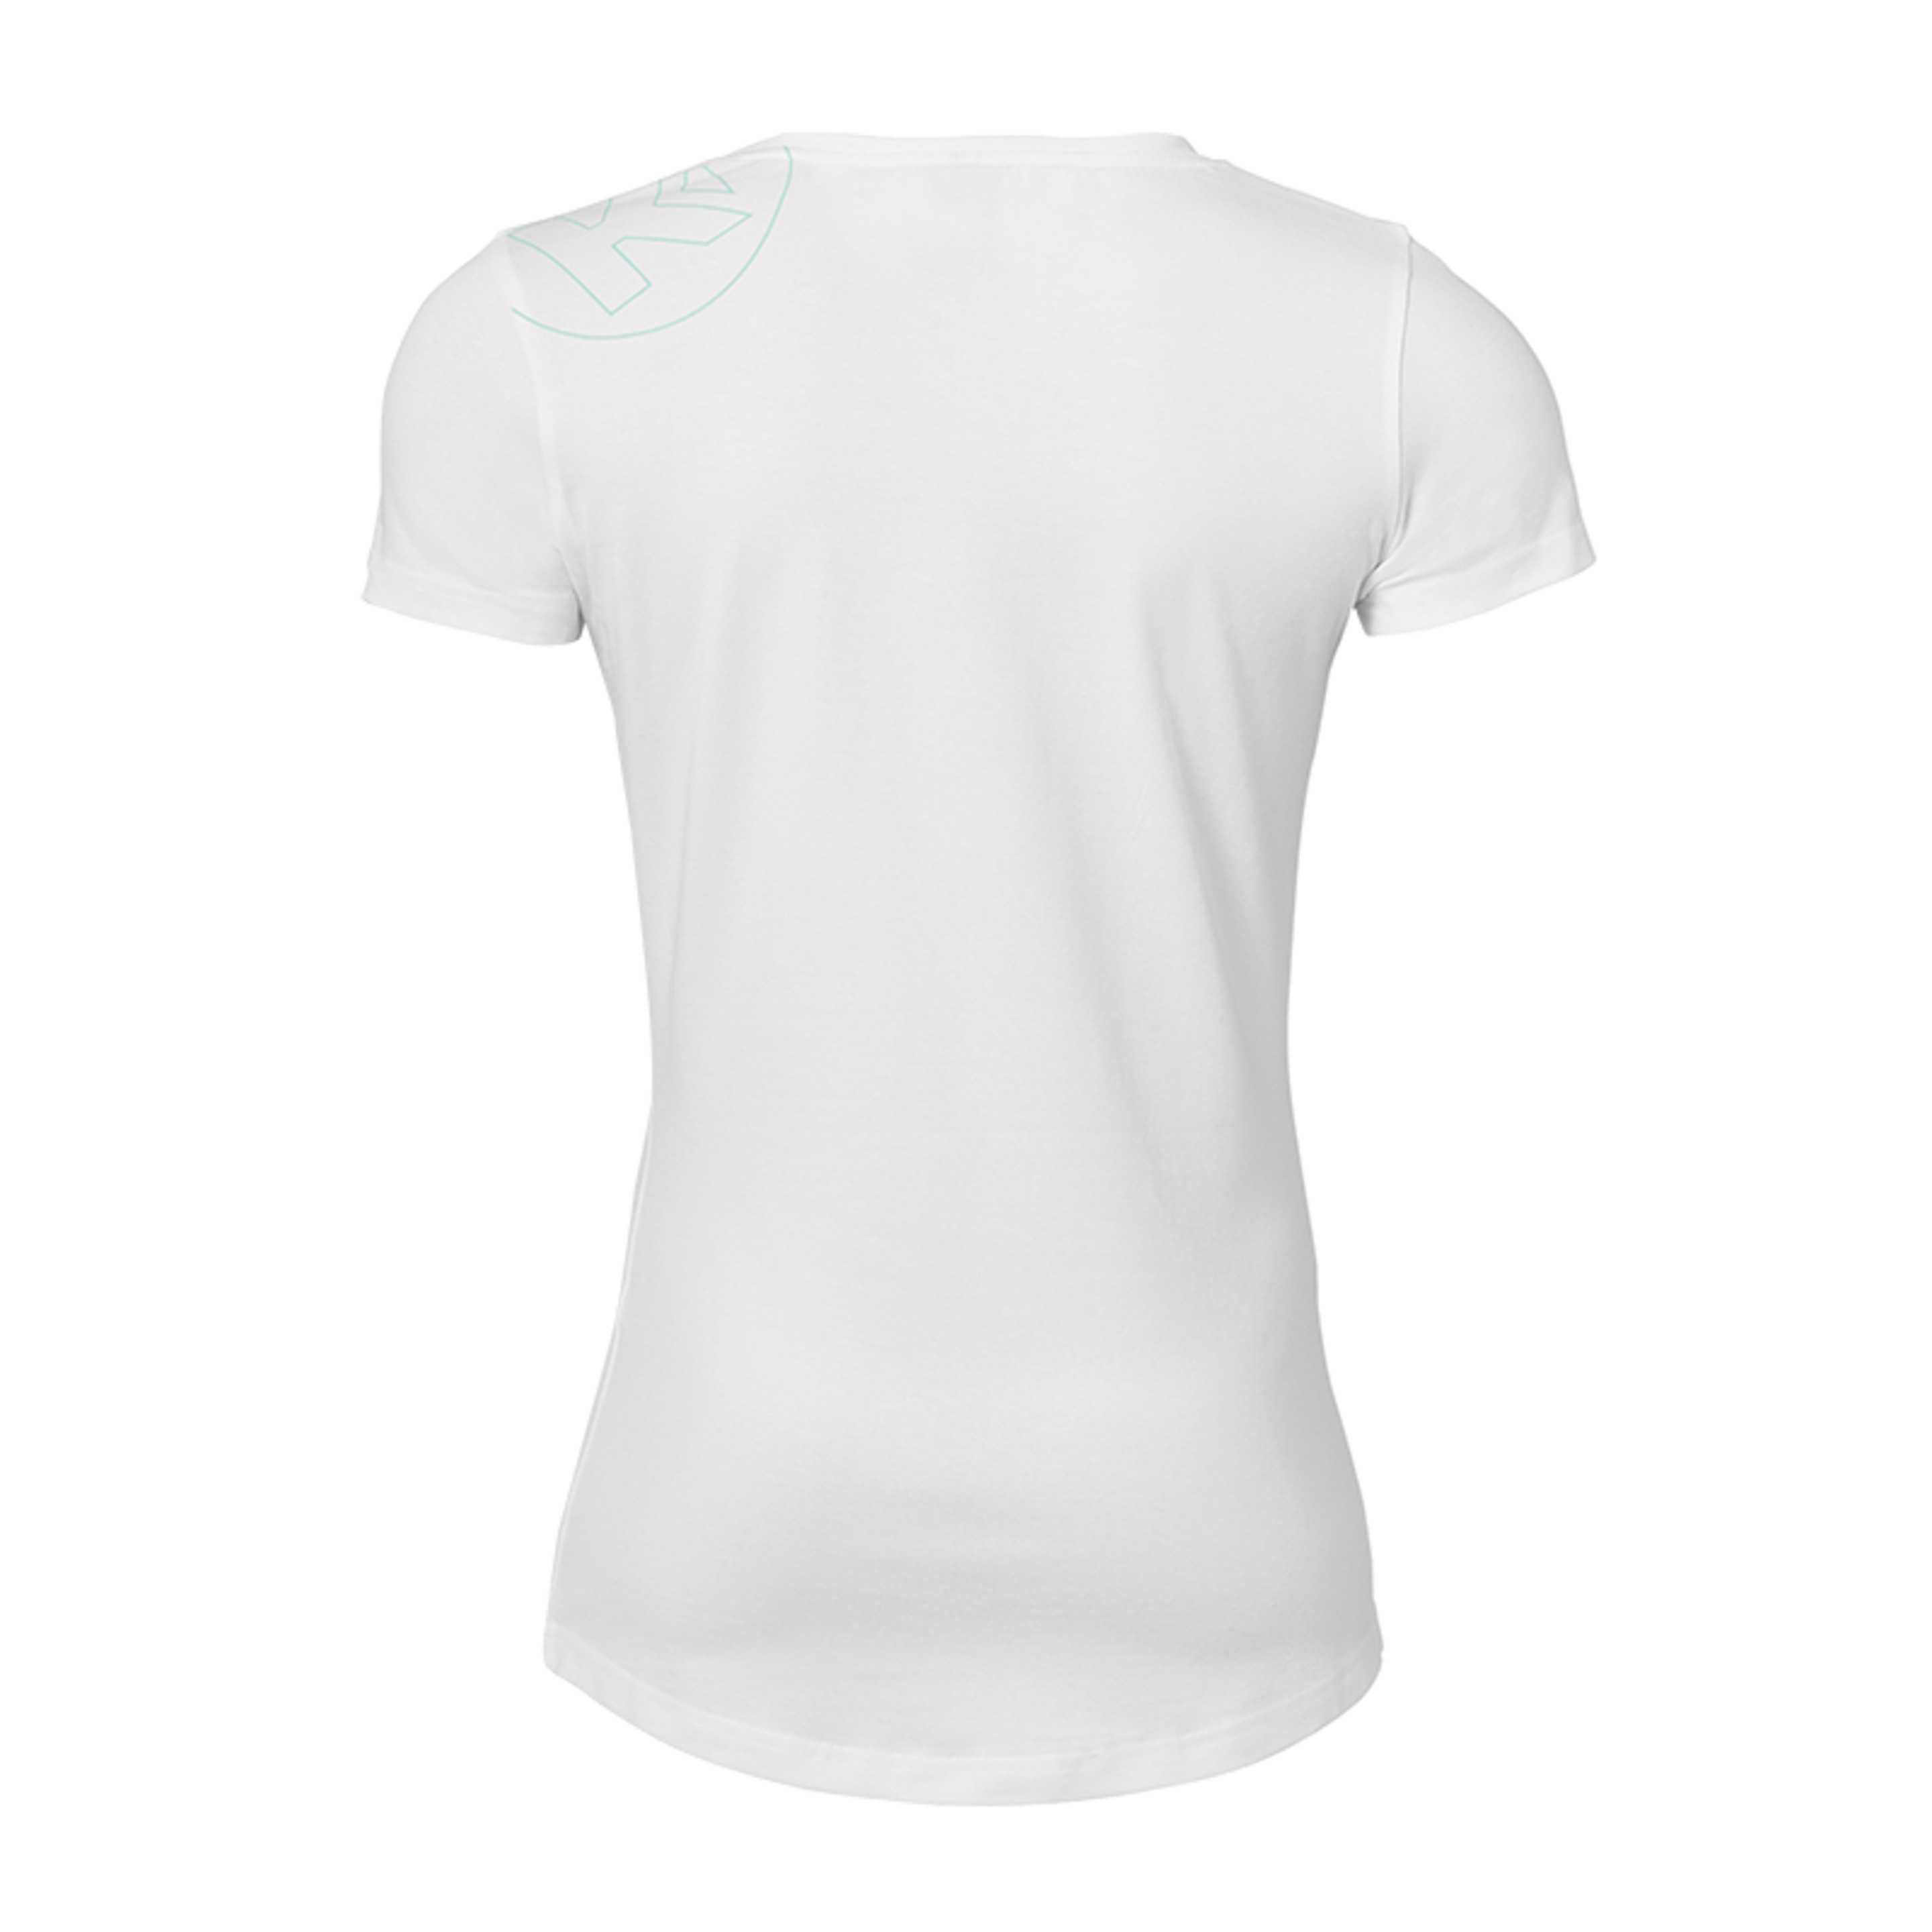 Graphic T-shirt Girls Blanco Kempa - blanco - Graphic T-shirt Girls Blanco Kempa  MKP